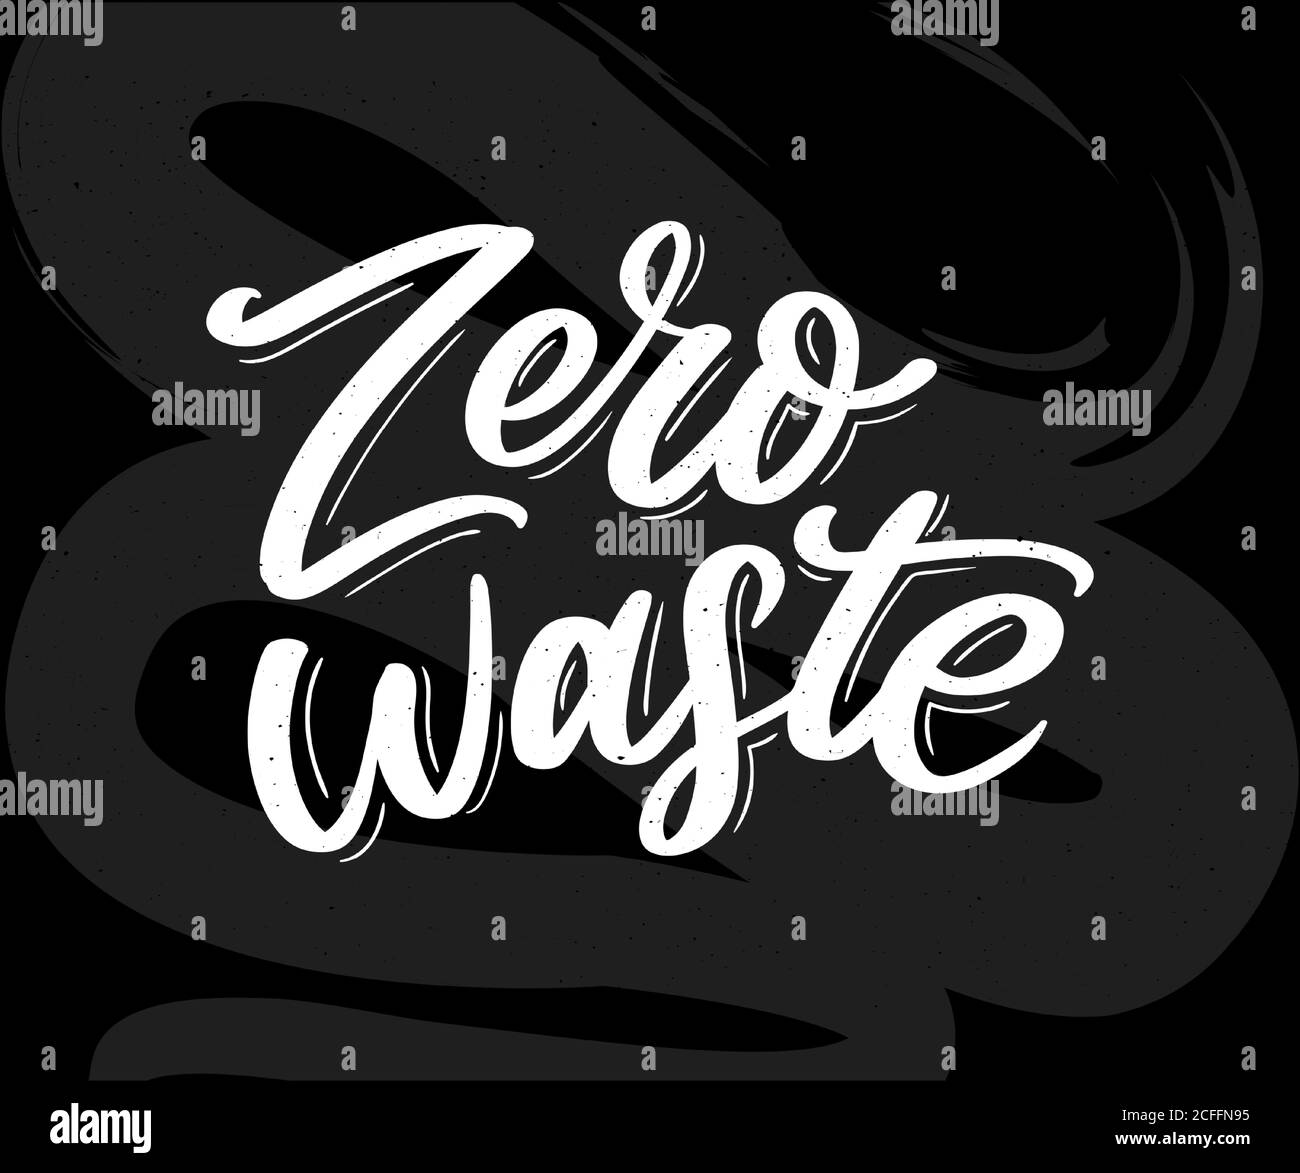 Zero waste conception Green Eco Ecology lettering text vector Stock Vector